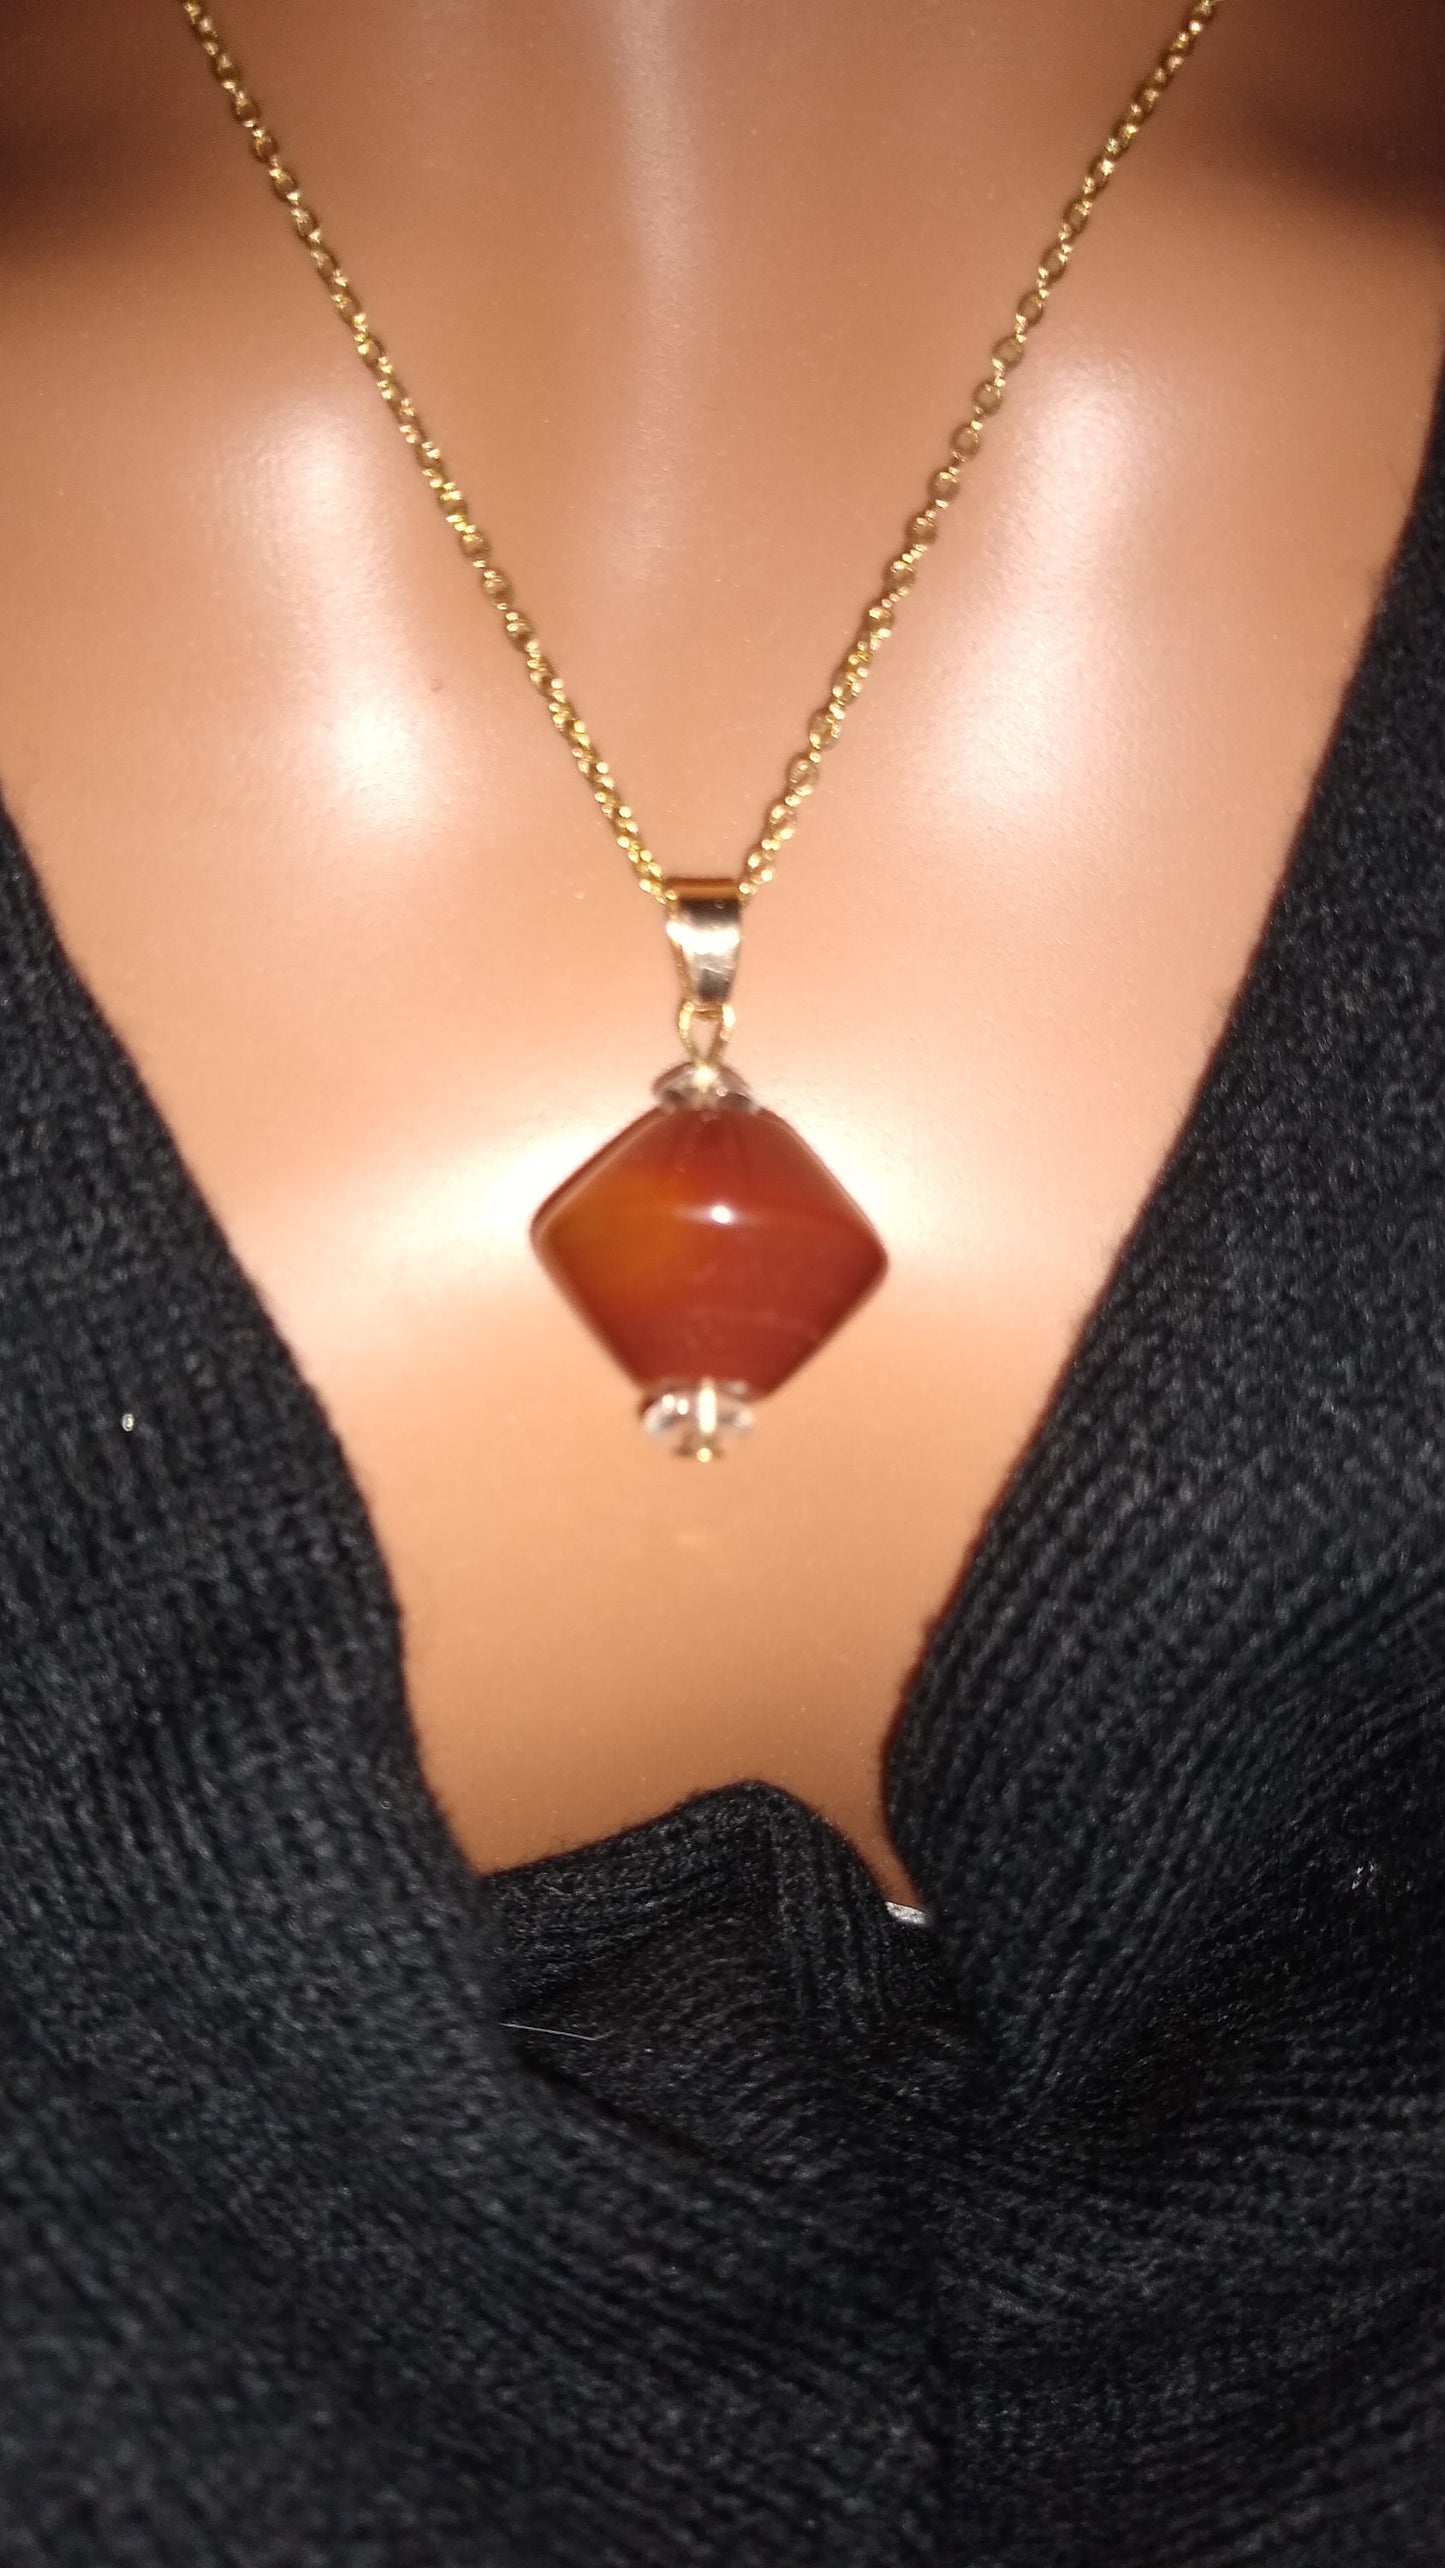 Carnelian necklace / Spinner / Attraction stone / Sacral chakra / real Carnelian / orange carnelian gemstone / gold silver chain /yoga gift